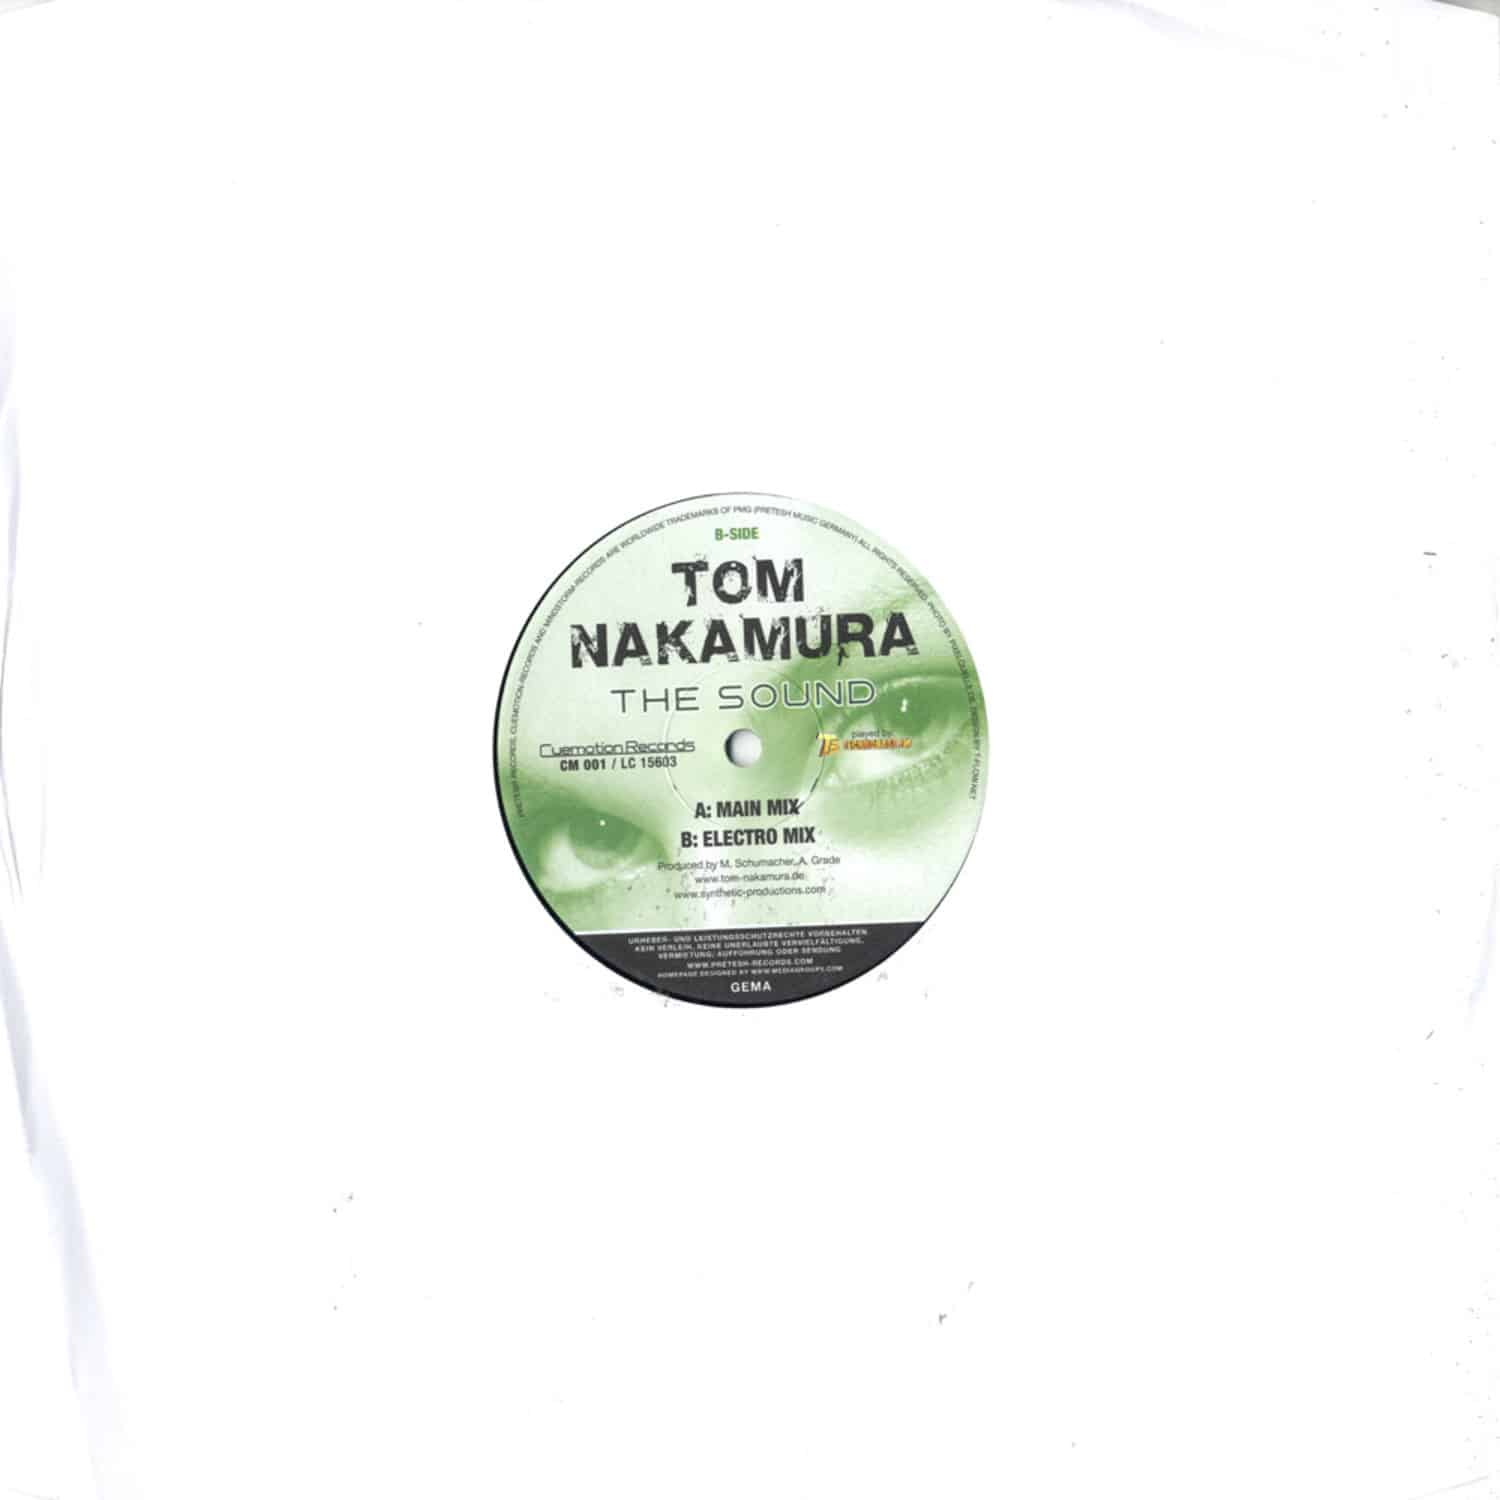 Tom Nakamura - THE SOUND